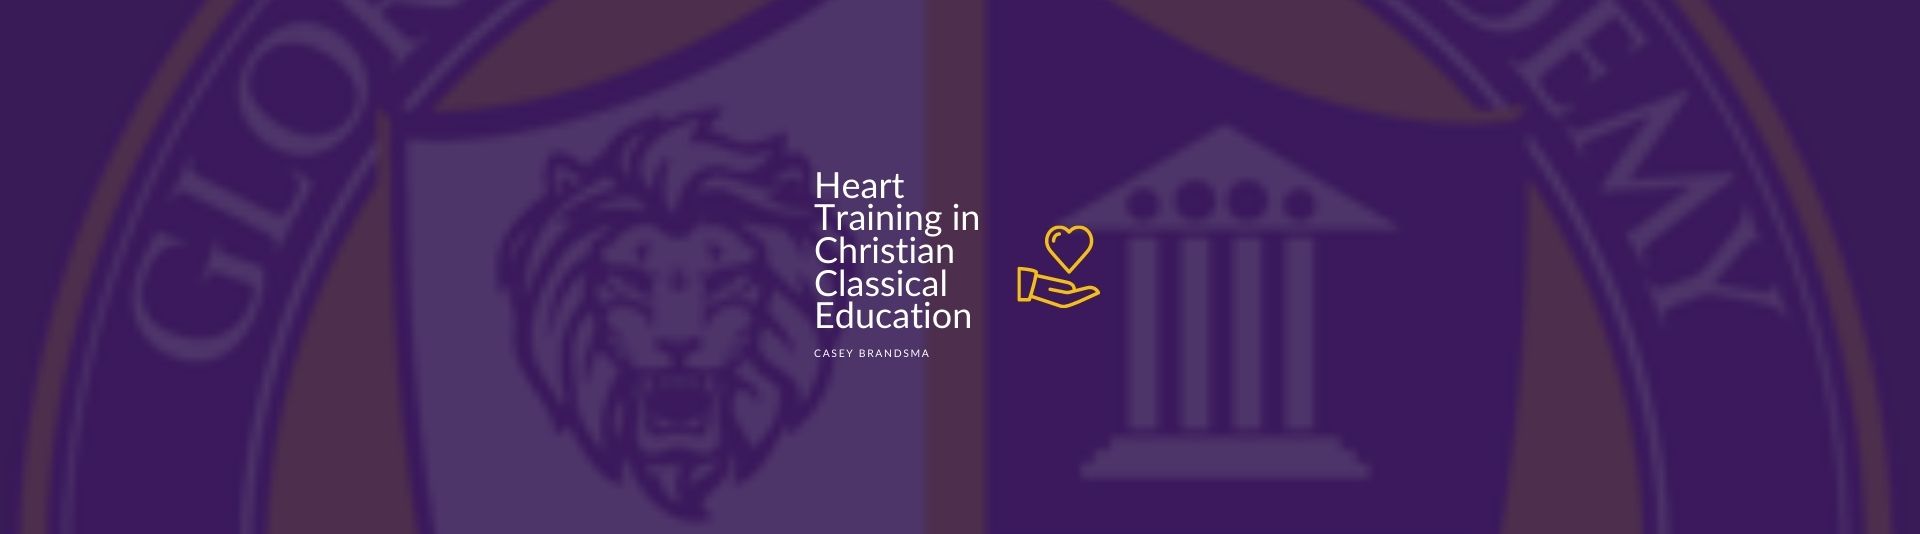 Gloria Deo Academy Heart Training in Christian Classical Education